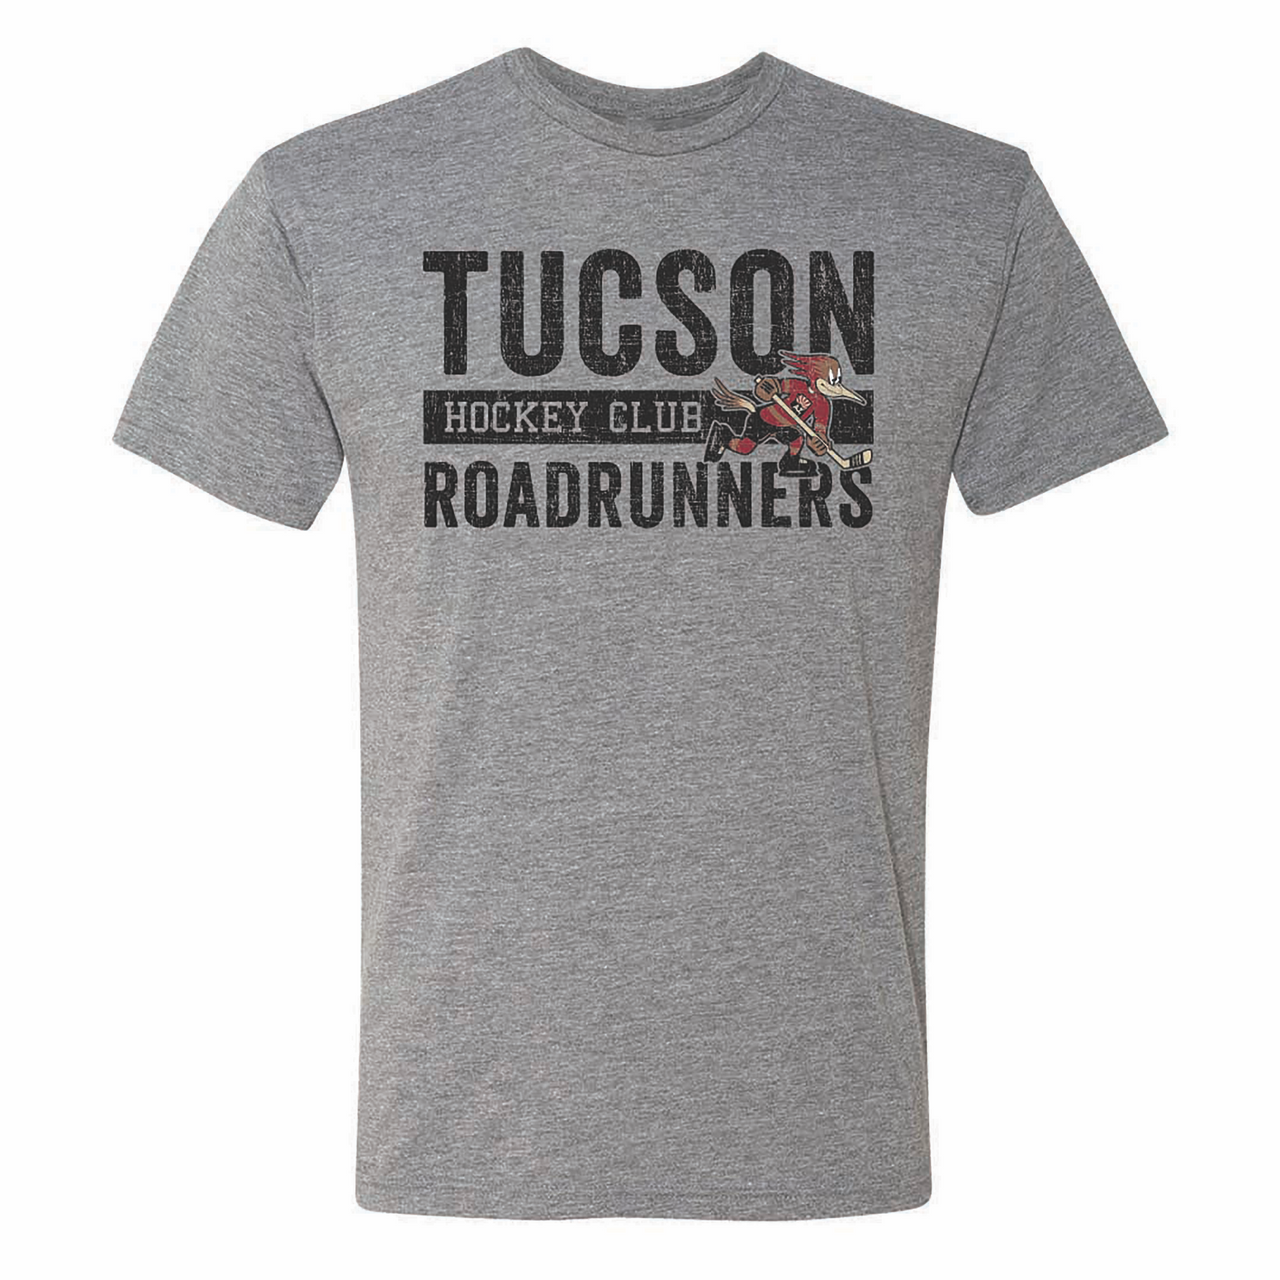 108 Stitches Tucson Roadrunners Hockey Club Adult Short Sleeve T-Shirt (Sidewalk Sale, XL)